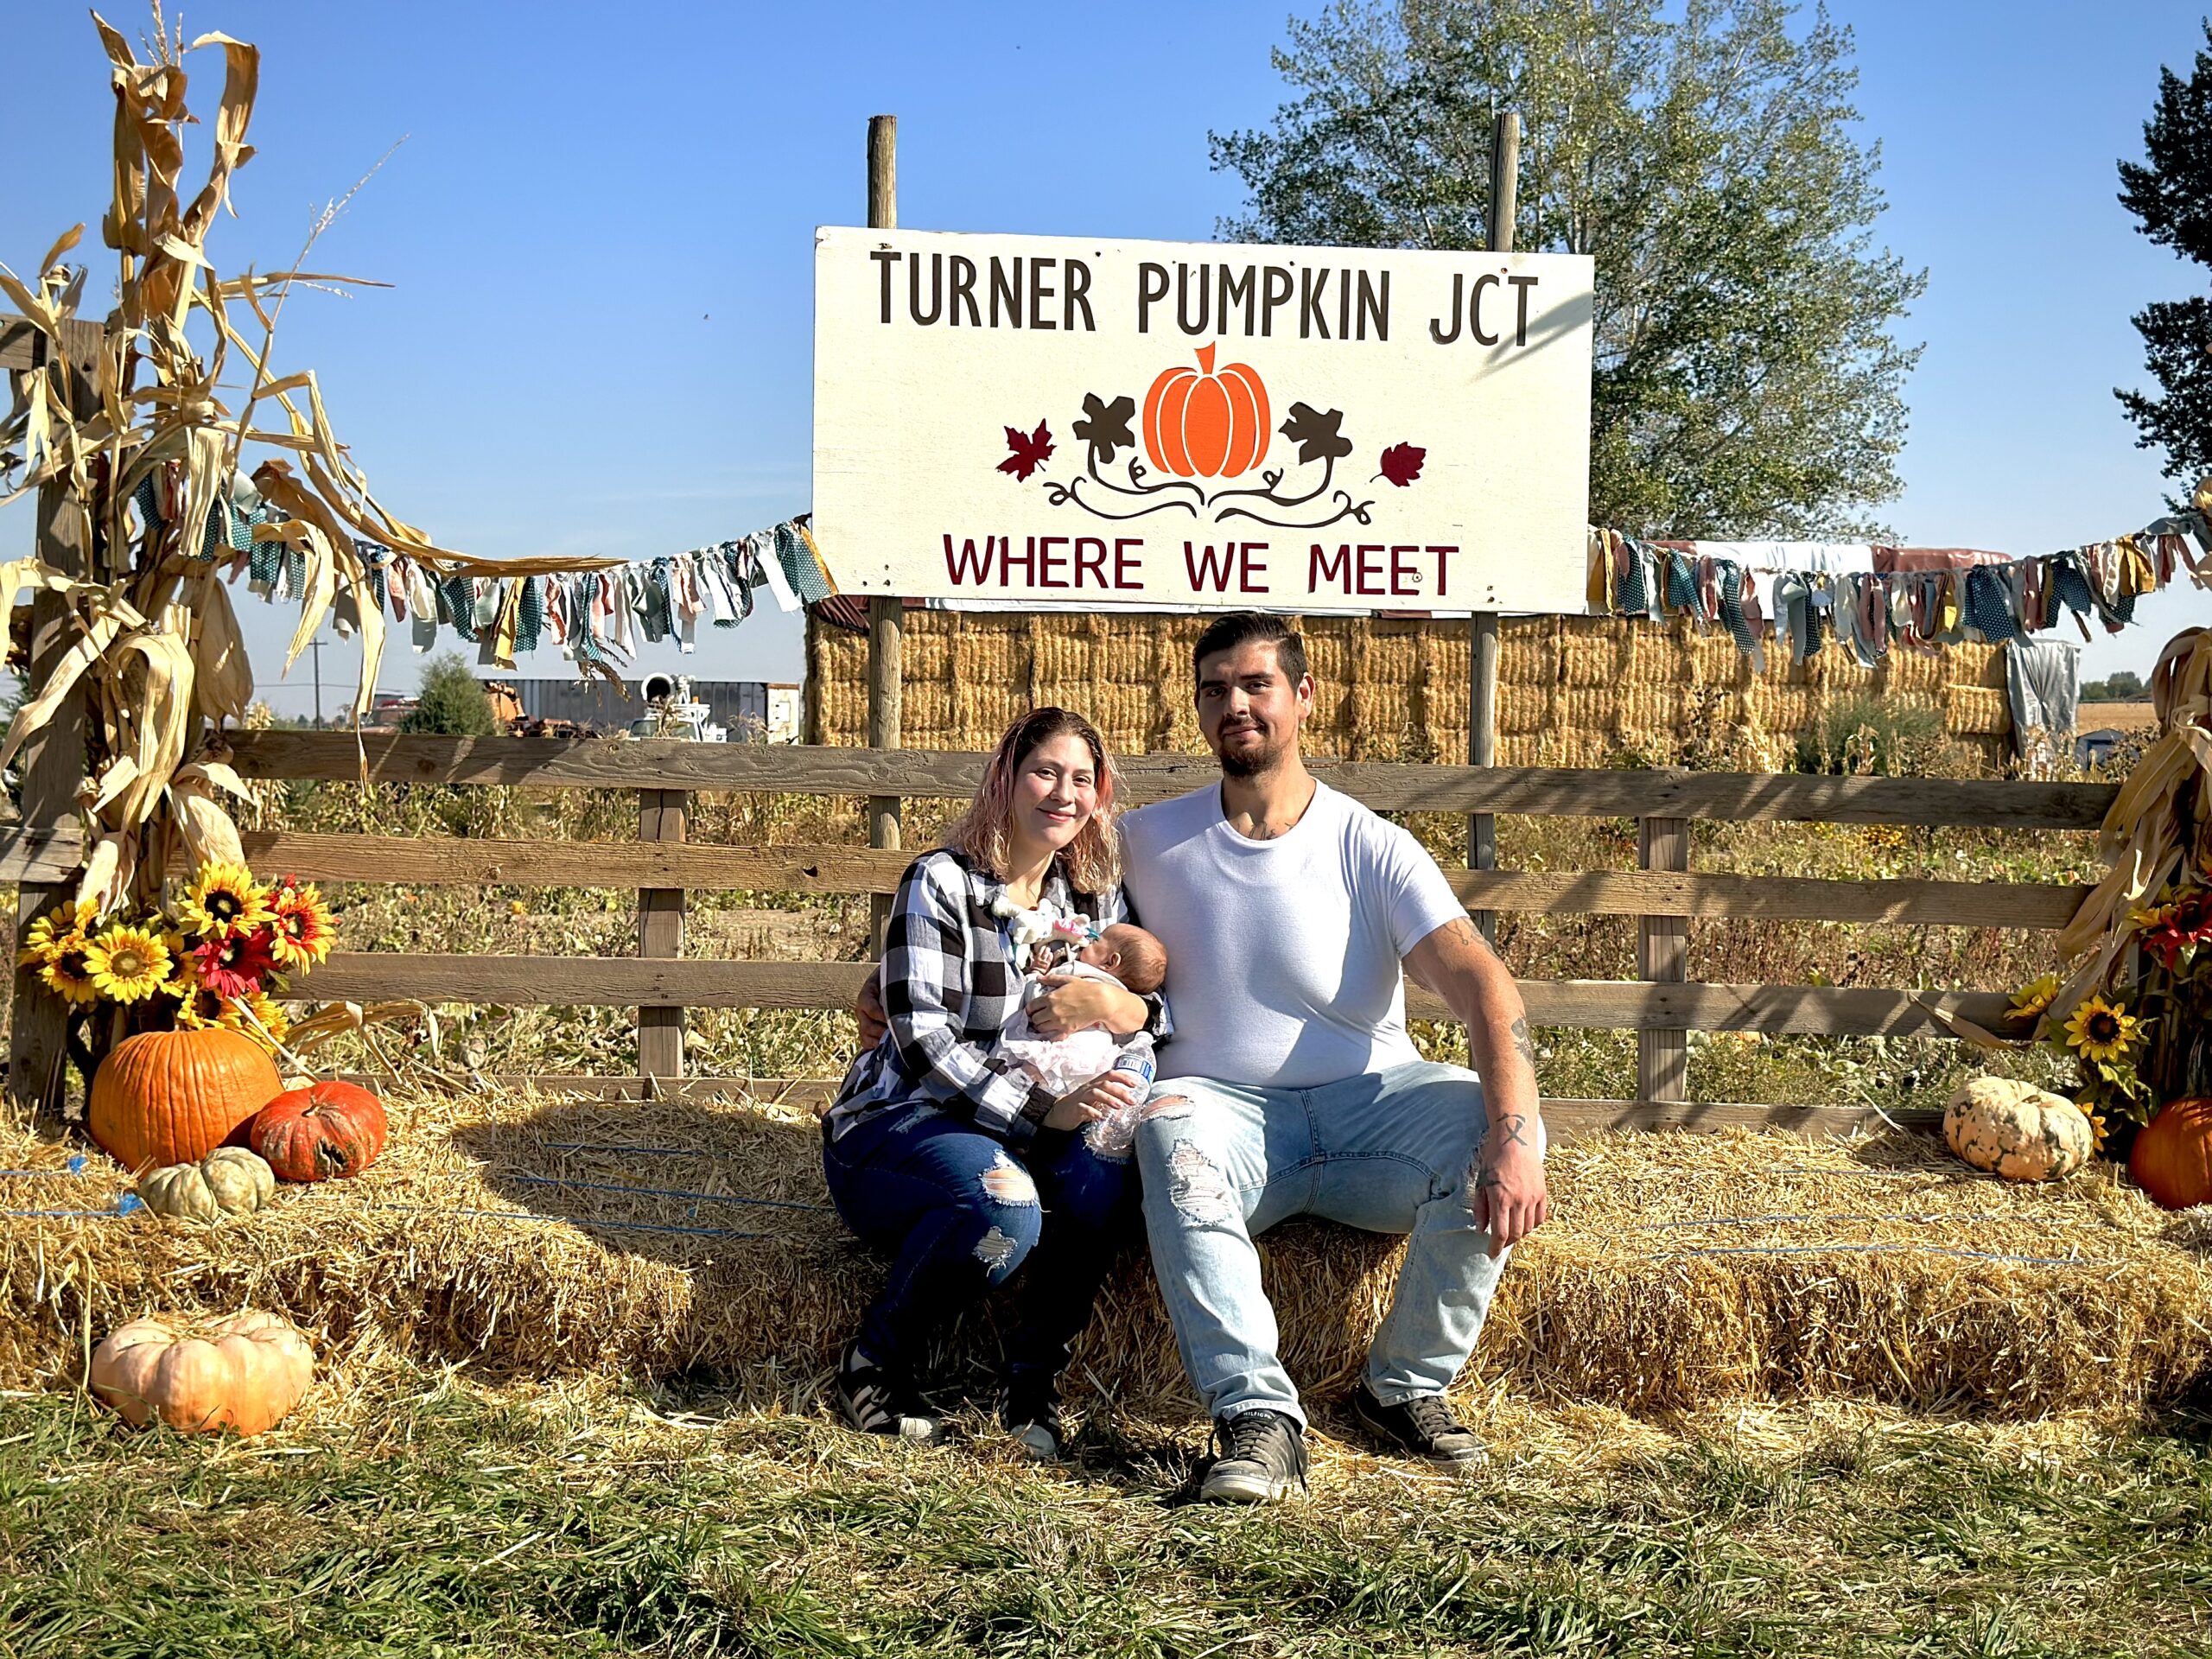 Turner pumpkin junction -130